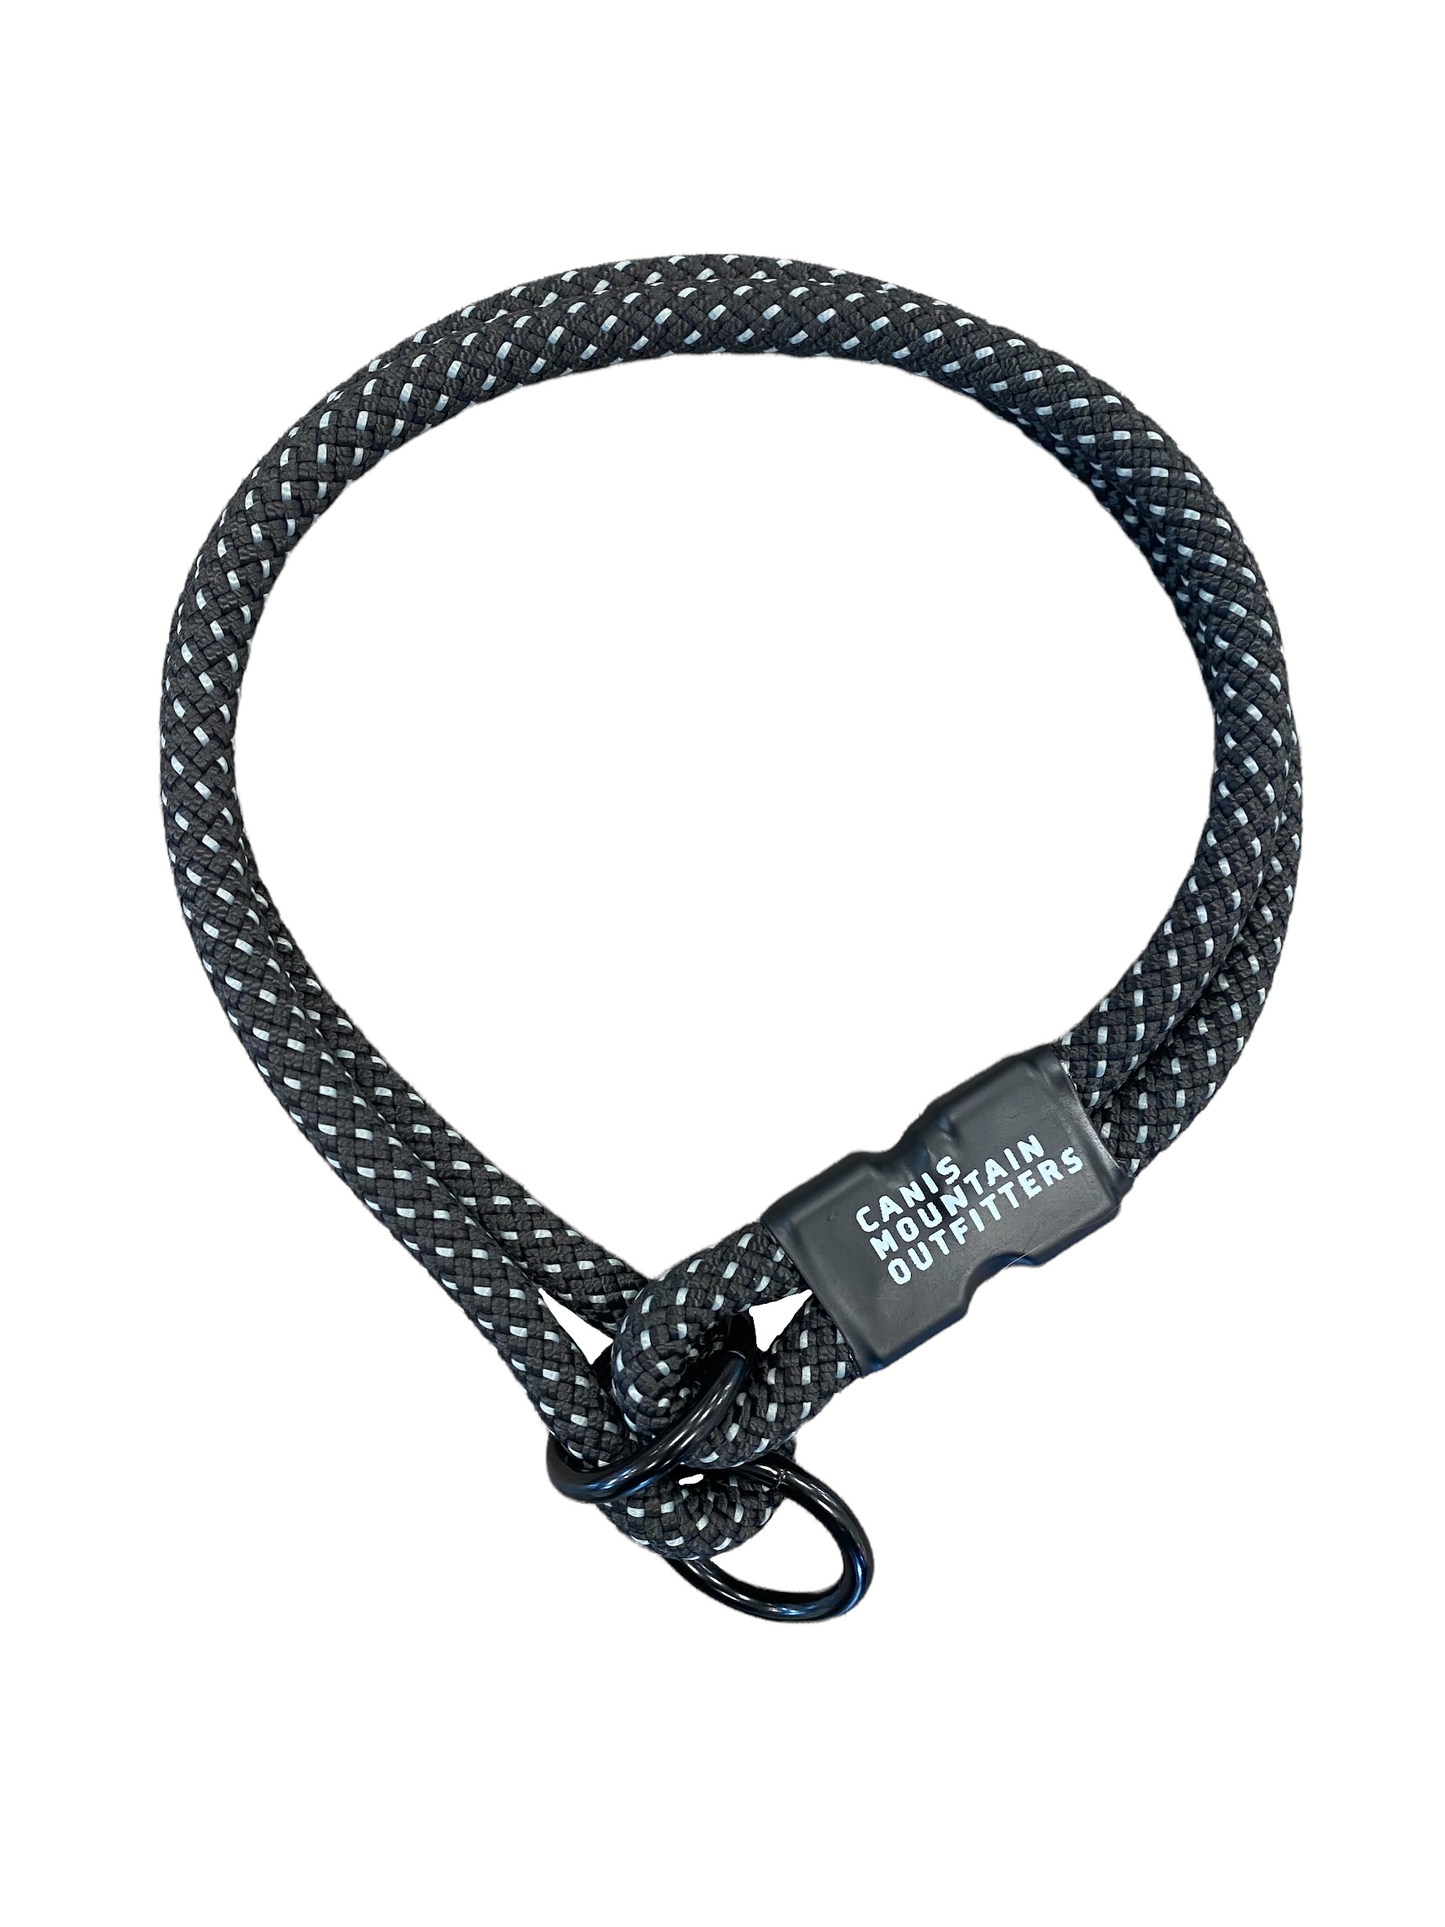 Slip Collar - Rugged Series - Black/White 10mm